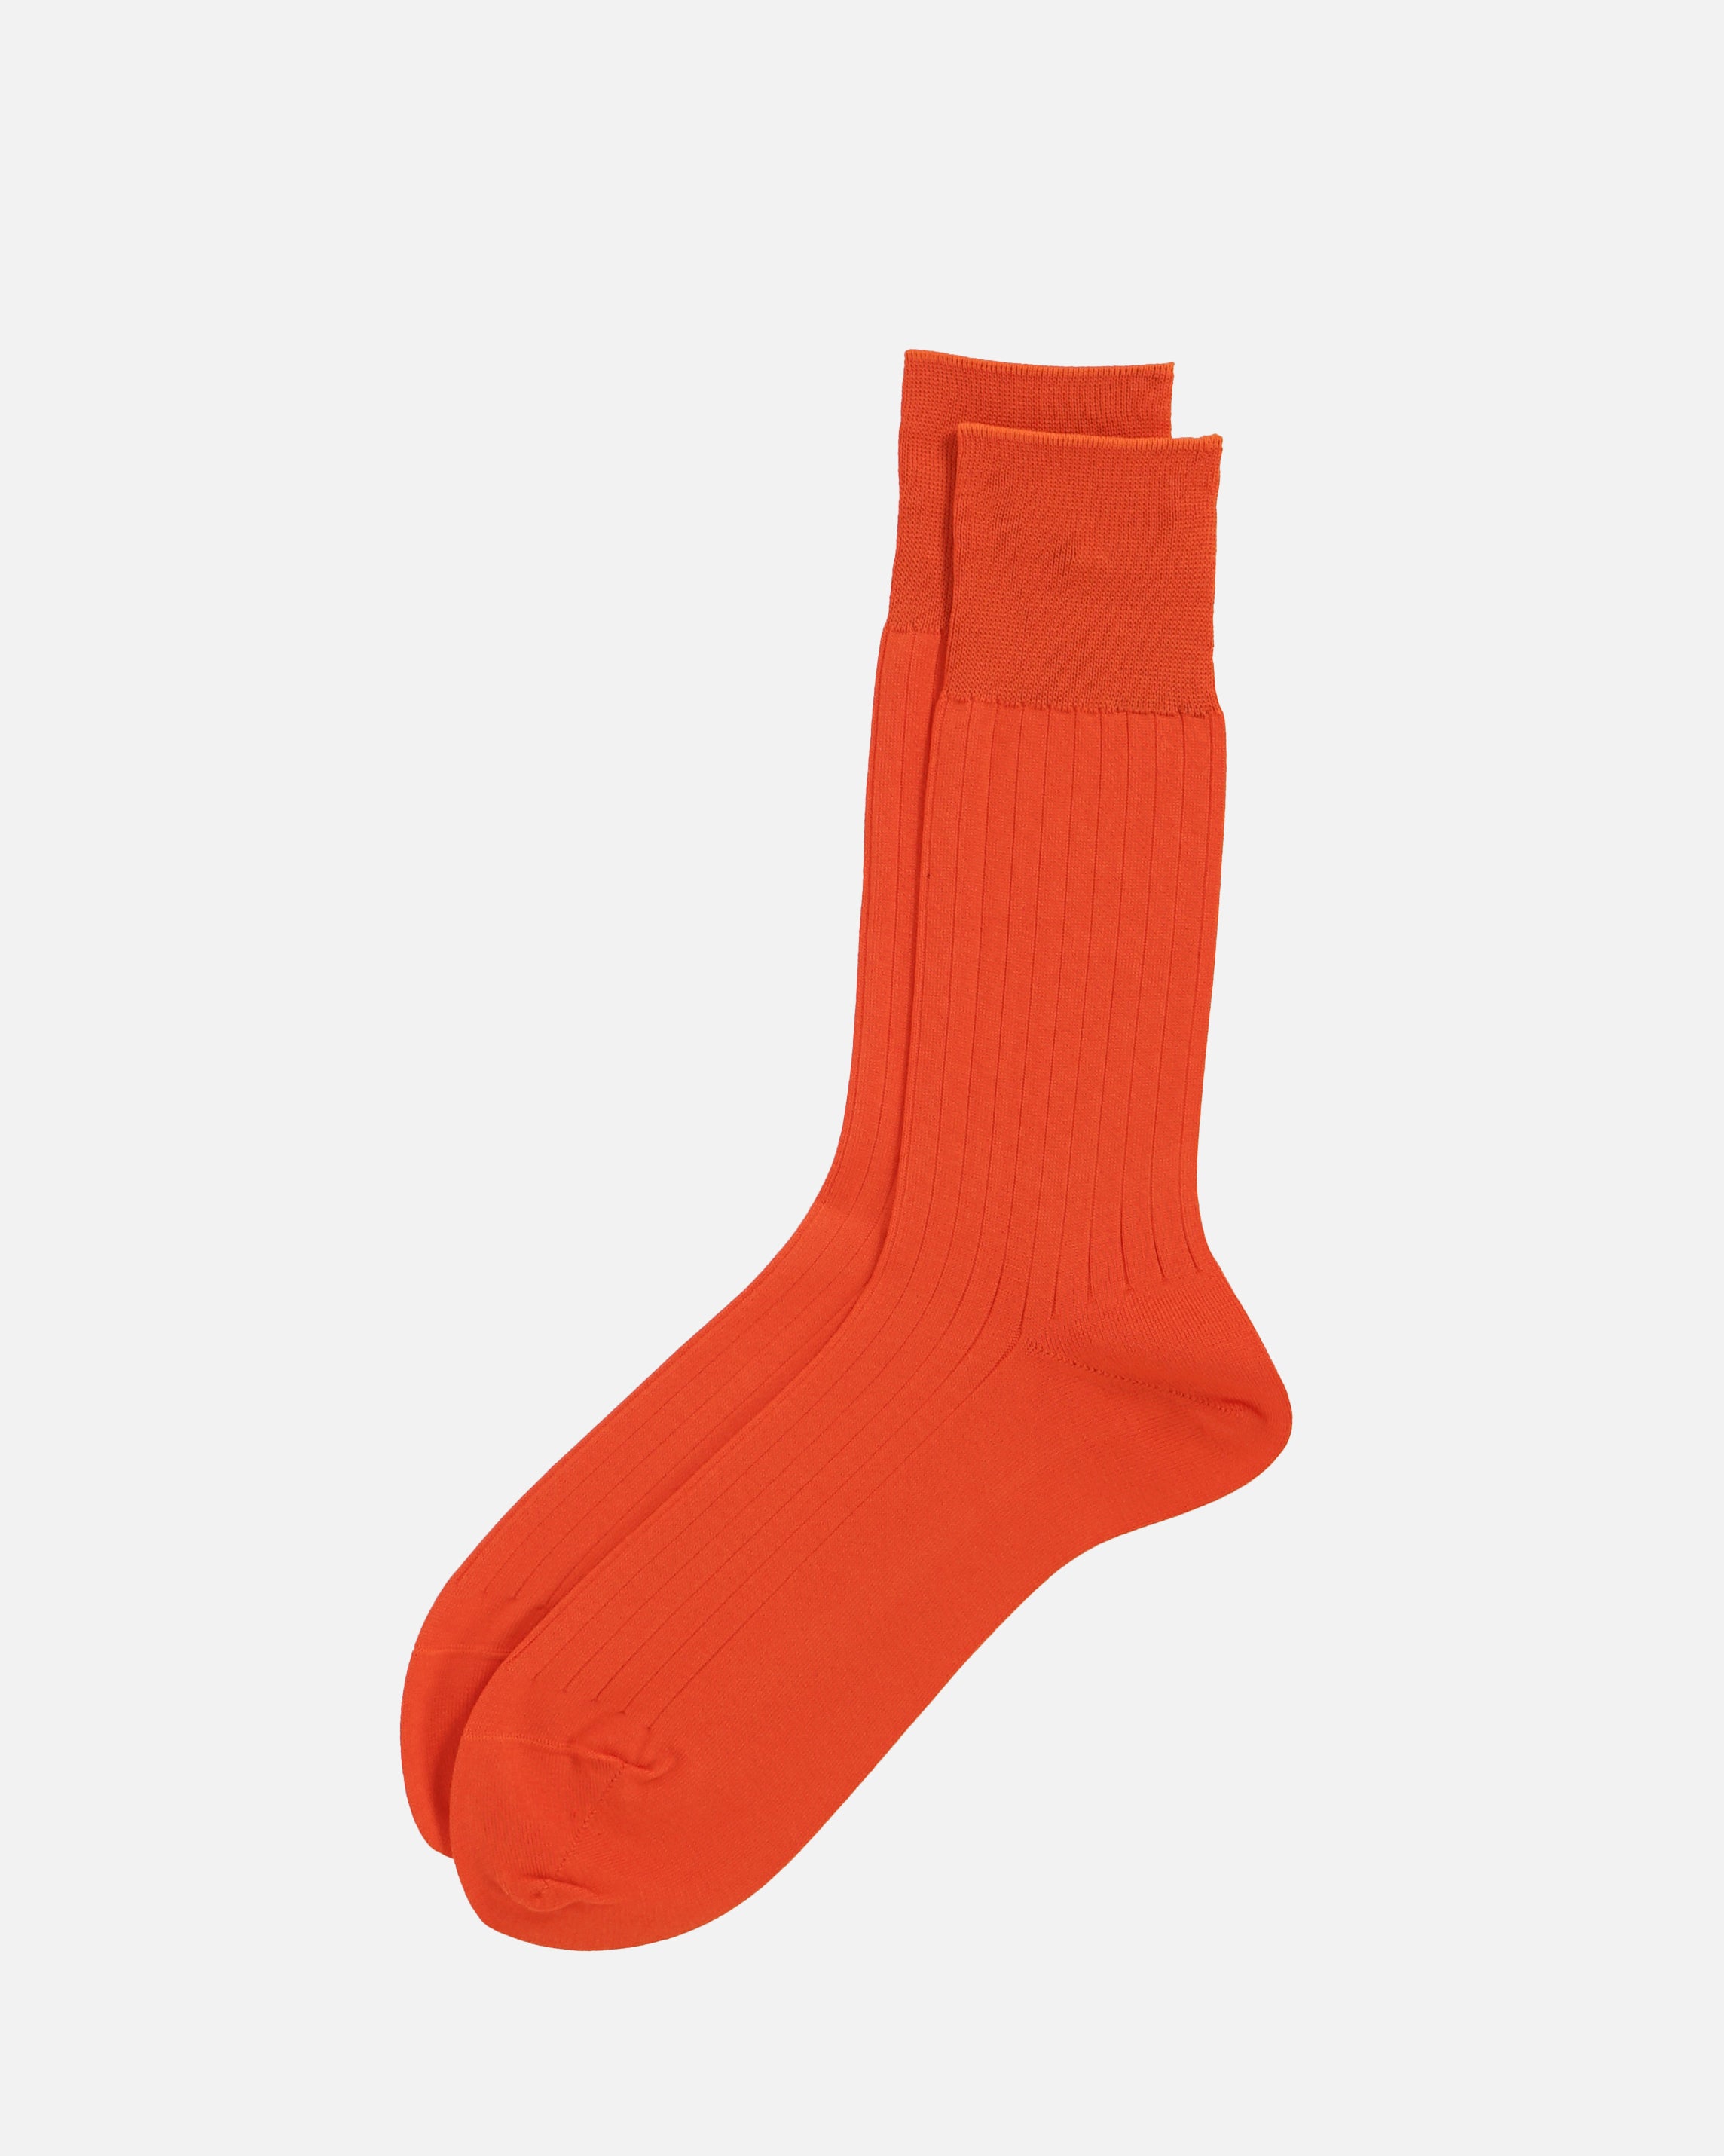 Dress Socks Set / Orange Black Light Gray